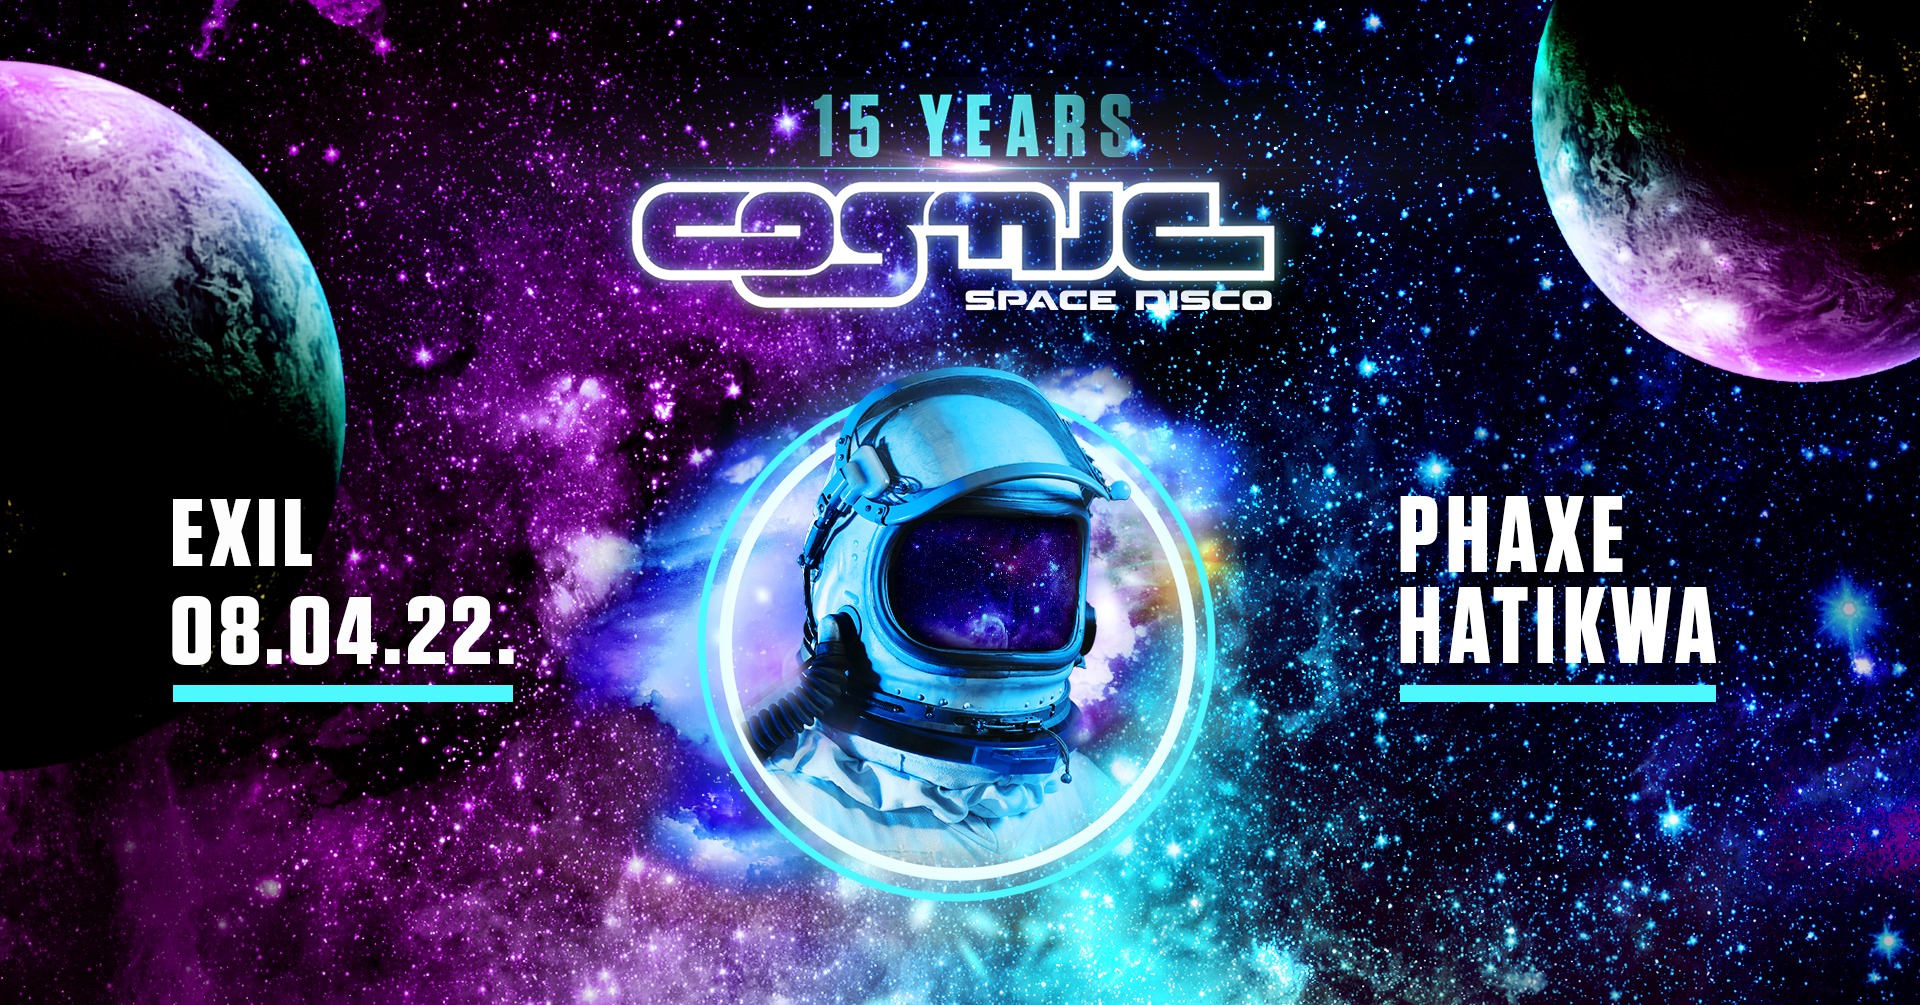 15 Years Cosmic am 8. April 2022 @ EXIL.